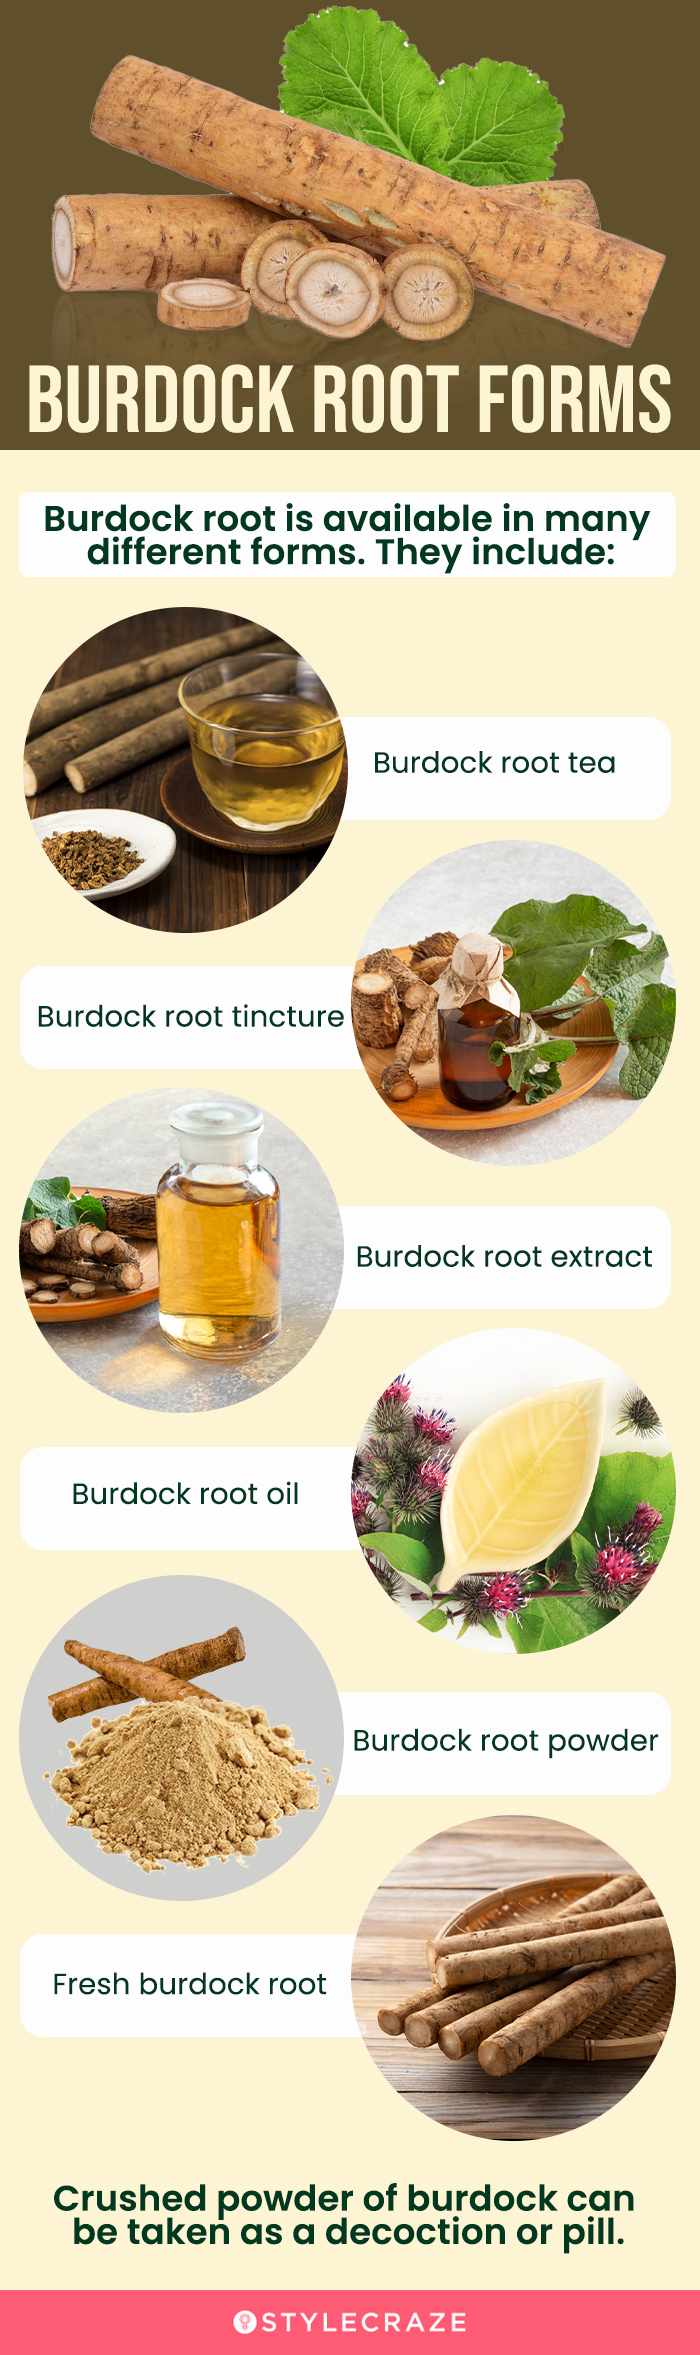 burdock root forms (infographic)